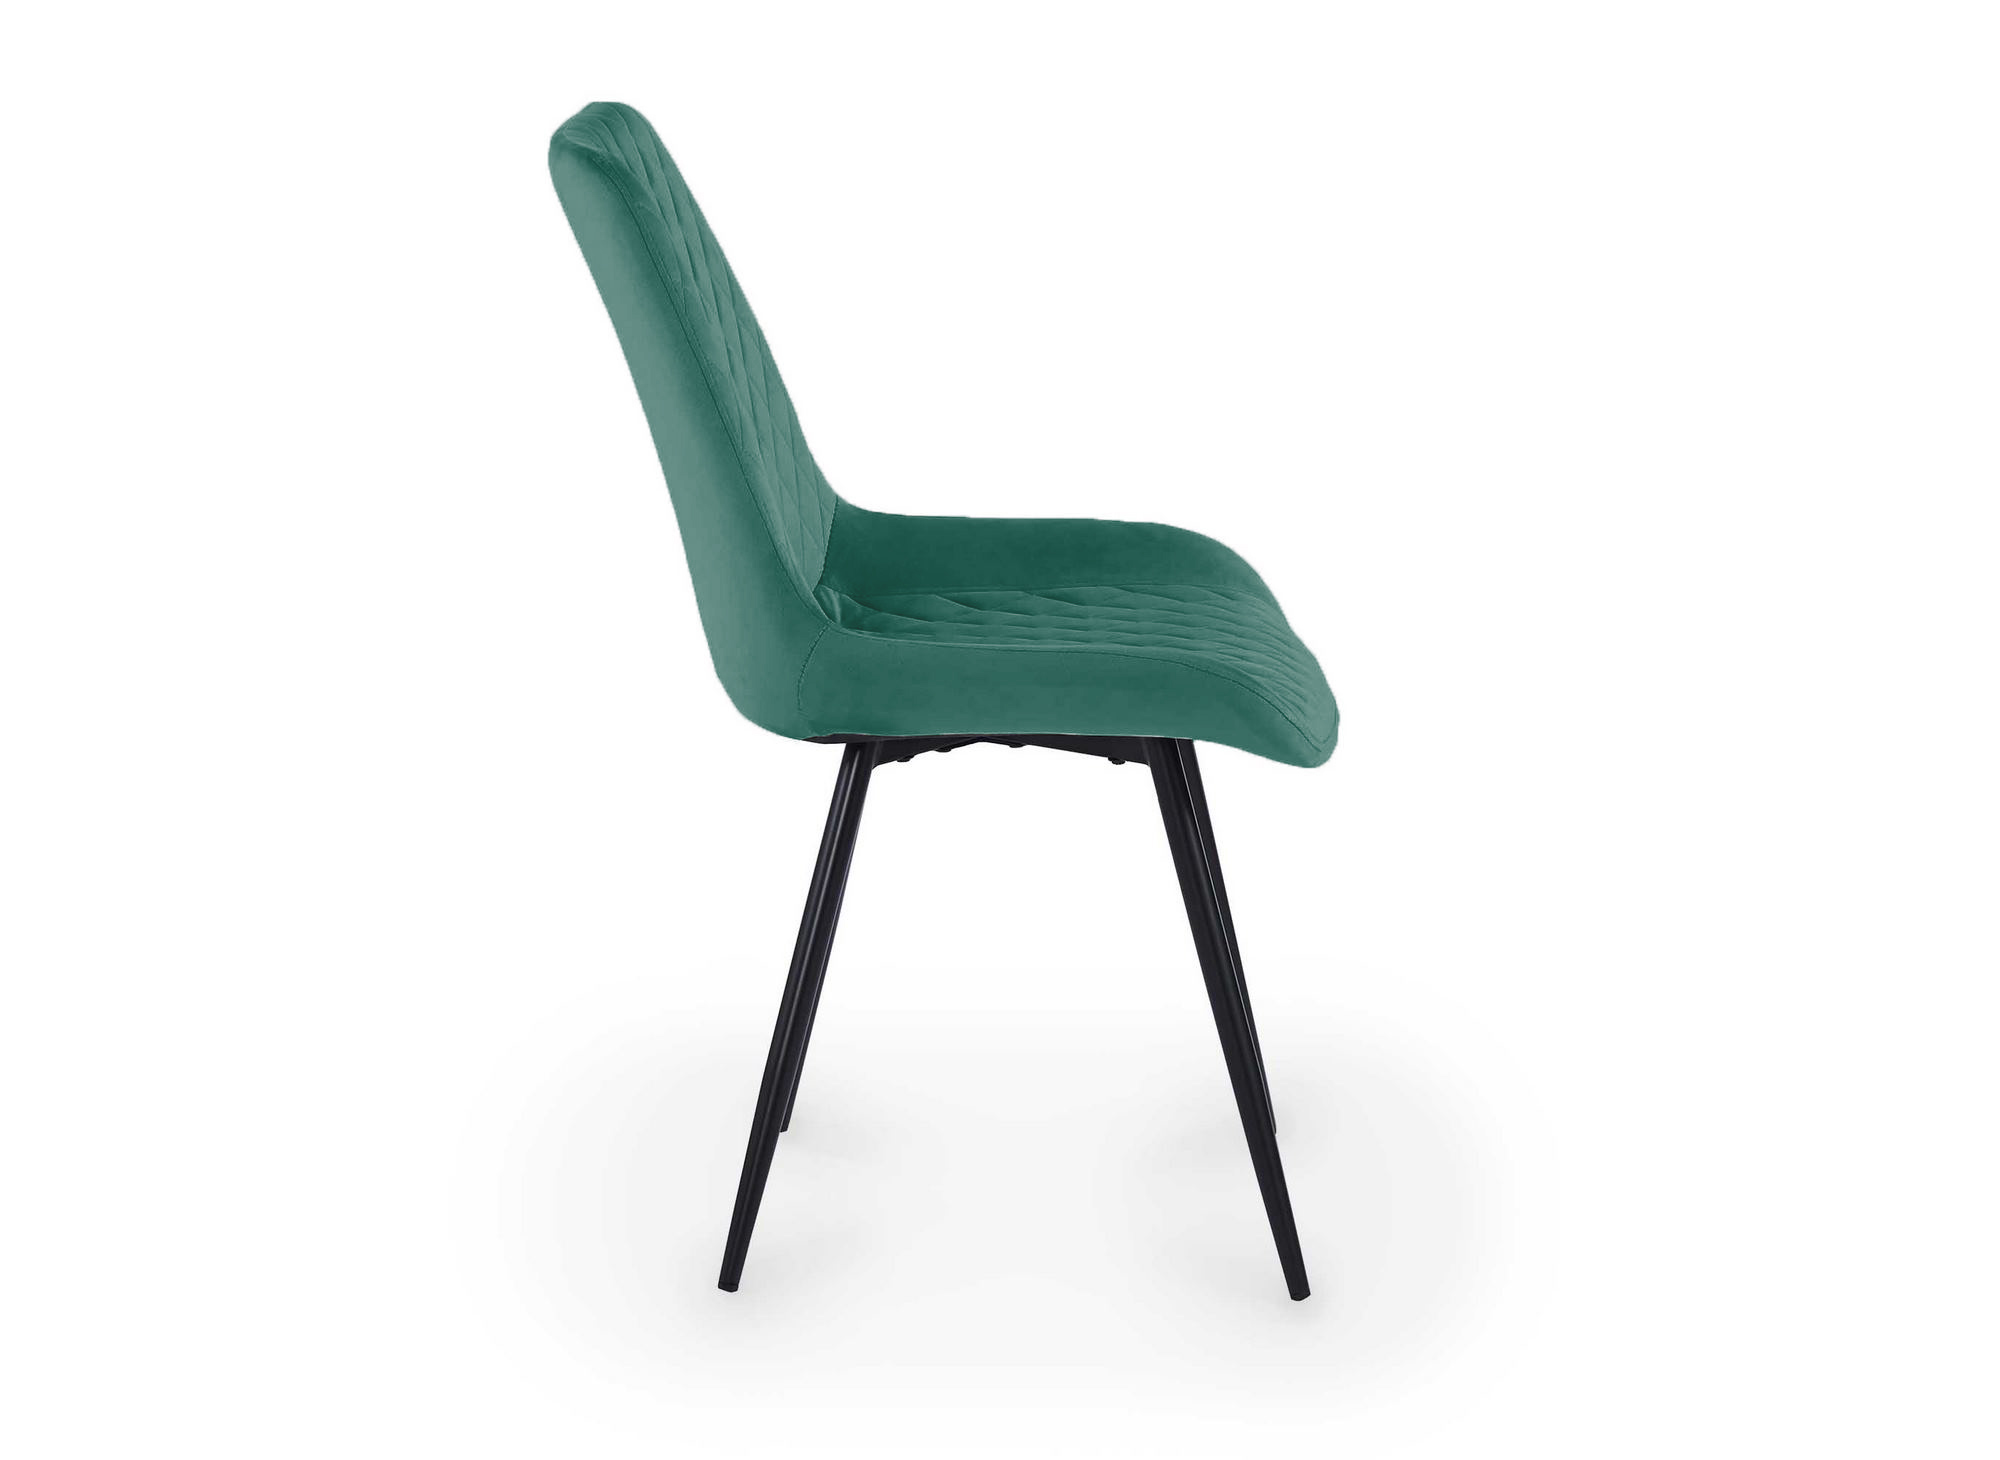 Lot de 2 chaises design en velours vert YOLA